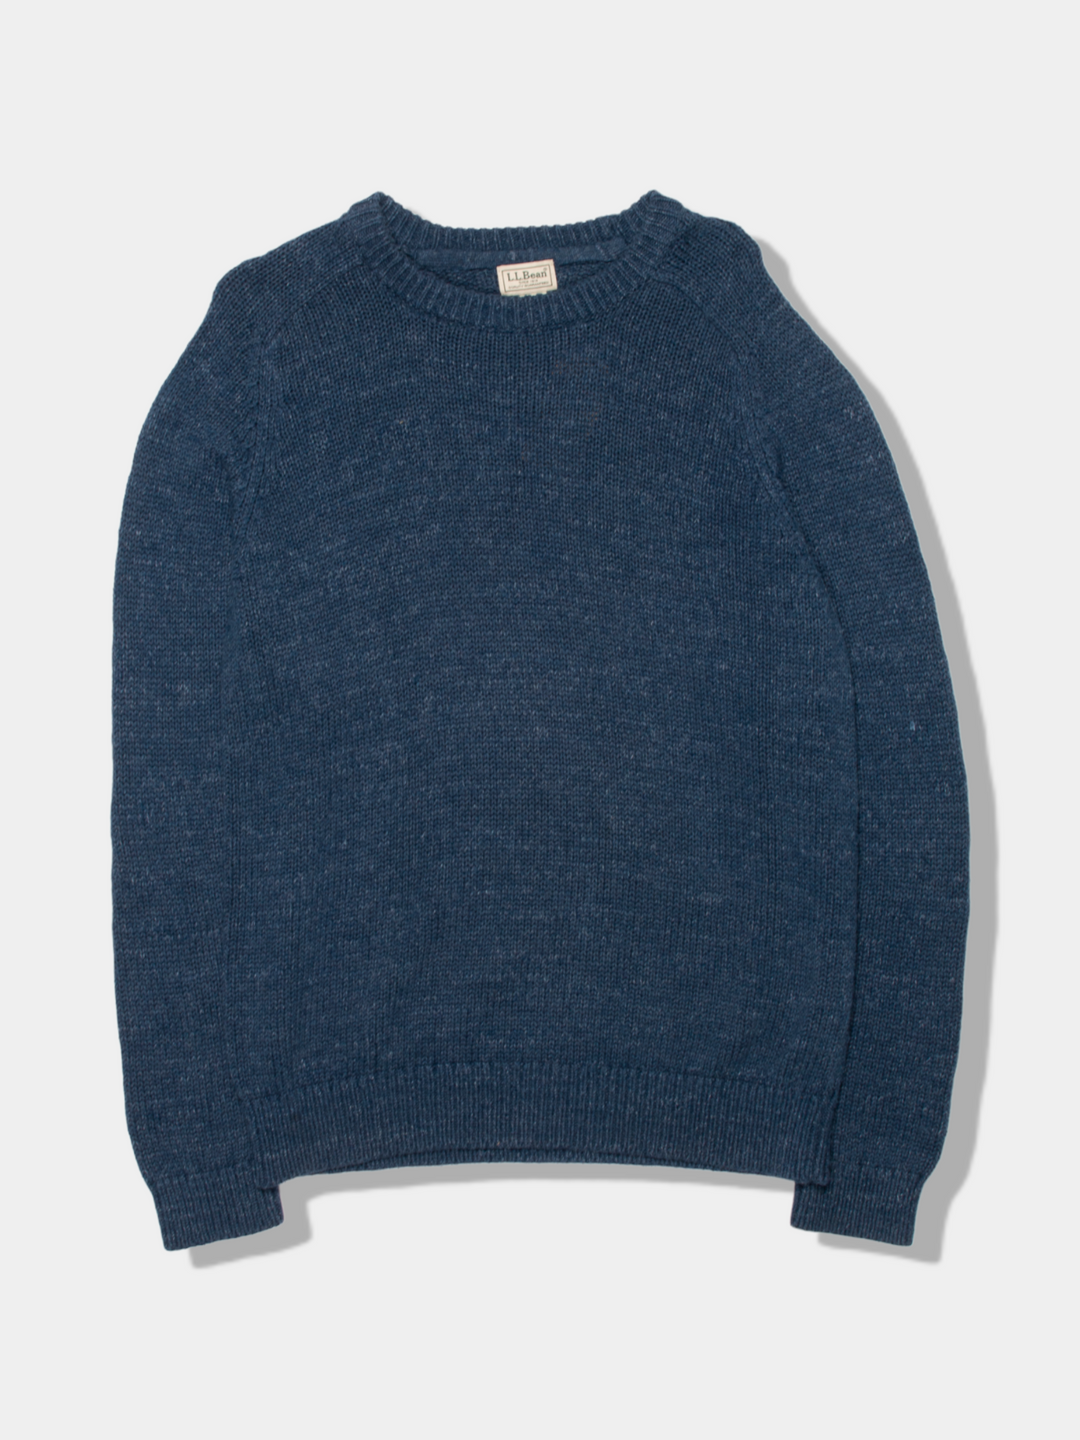 Vintage L.L.Bean Sweater (L)